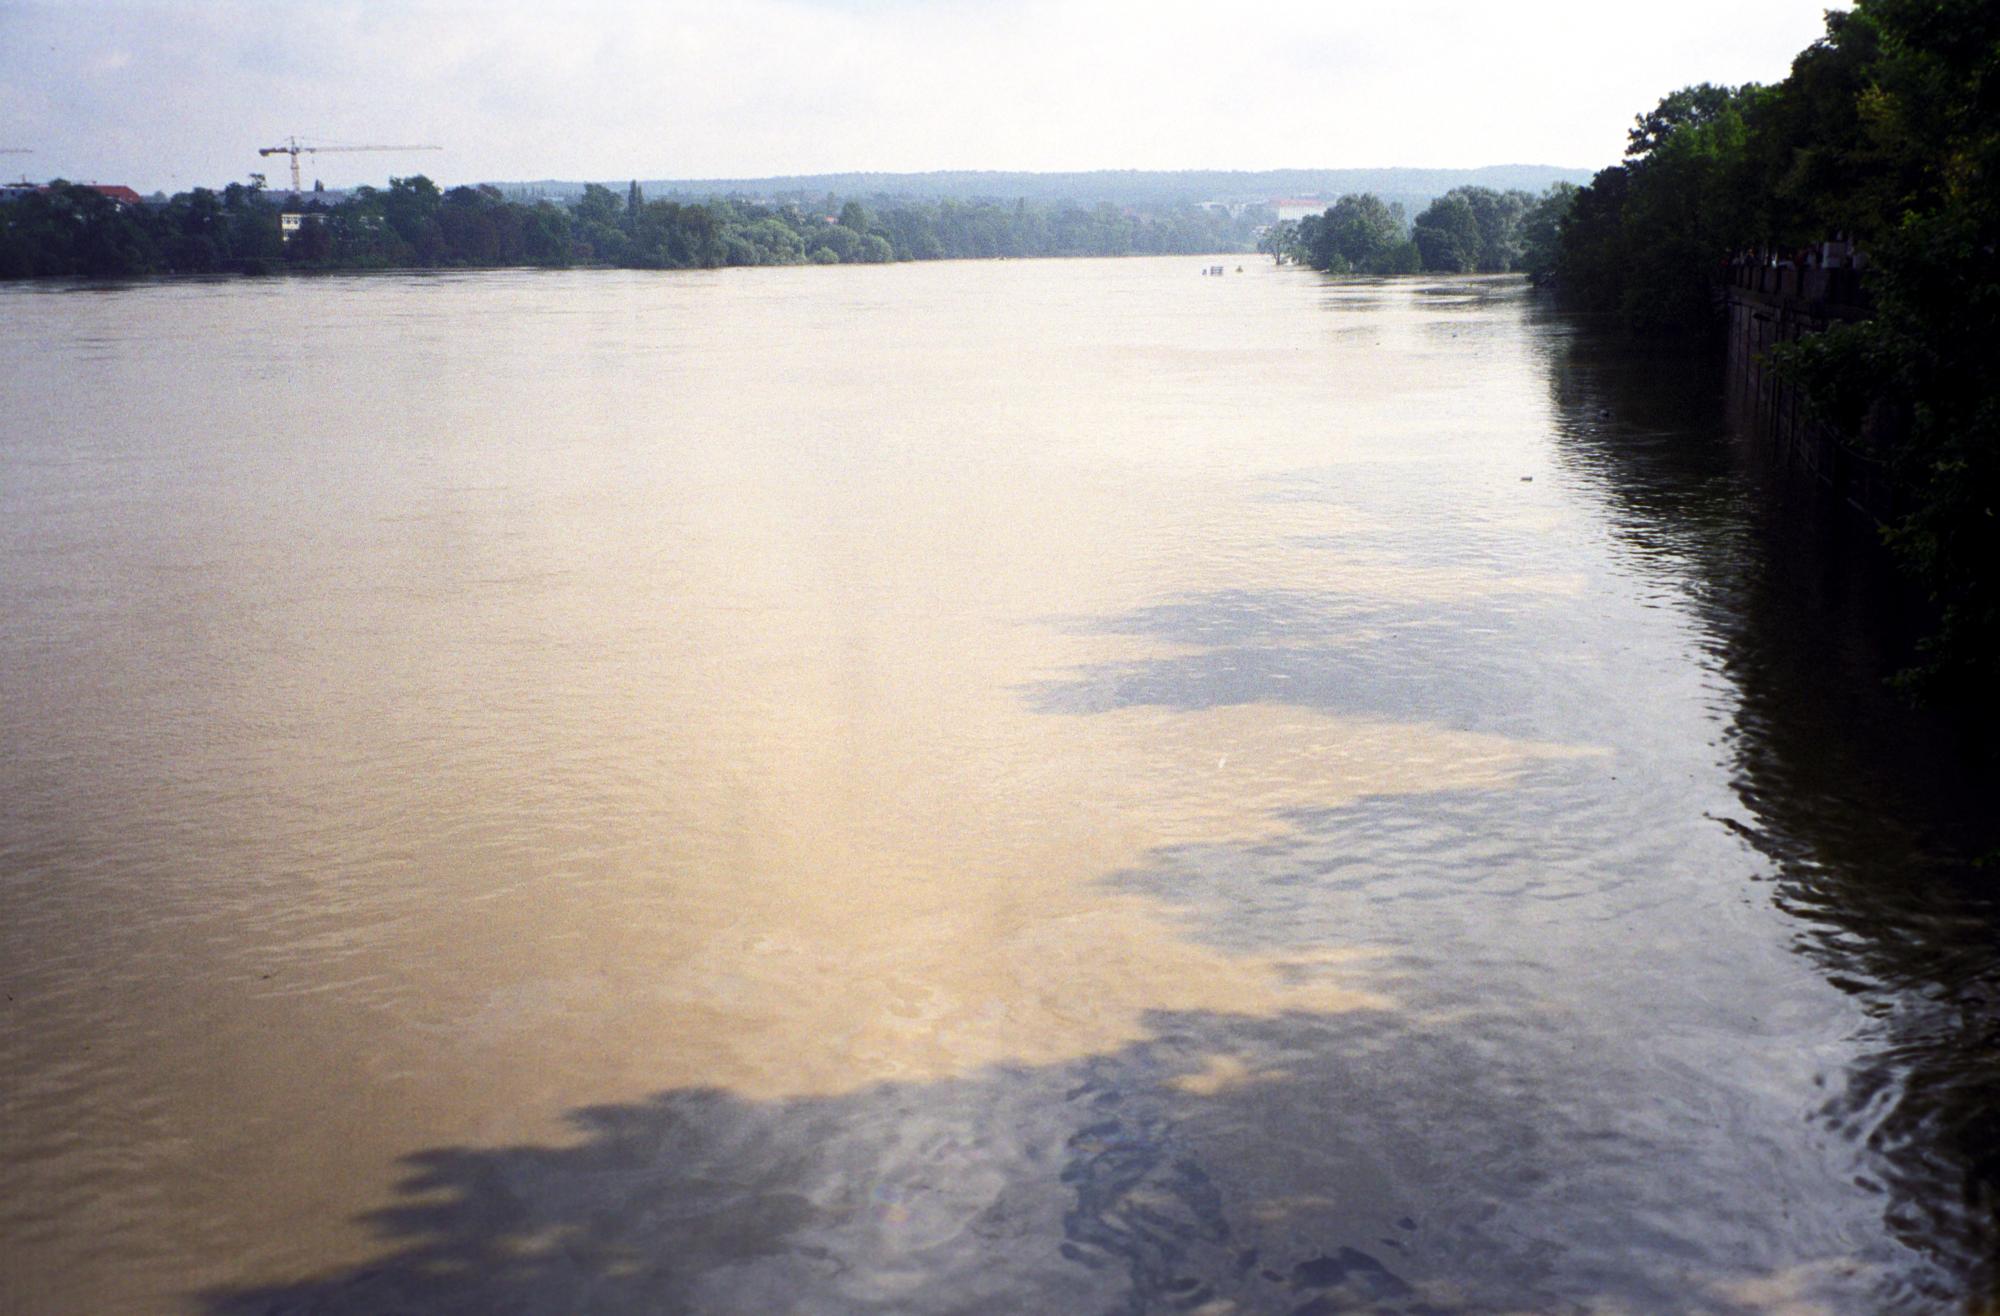 Dresden (2002) - Elbe Flooding #1